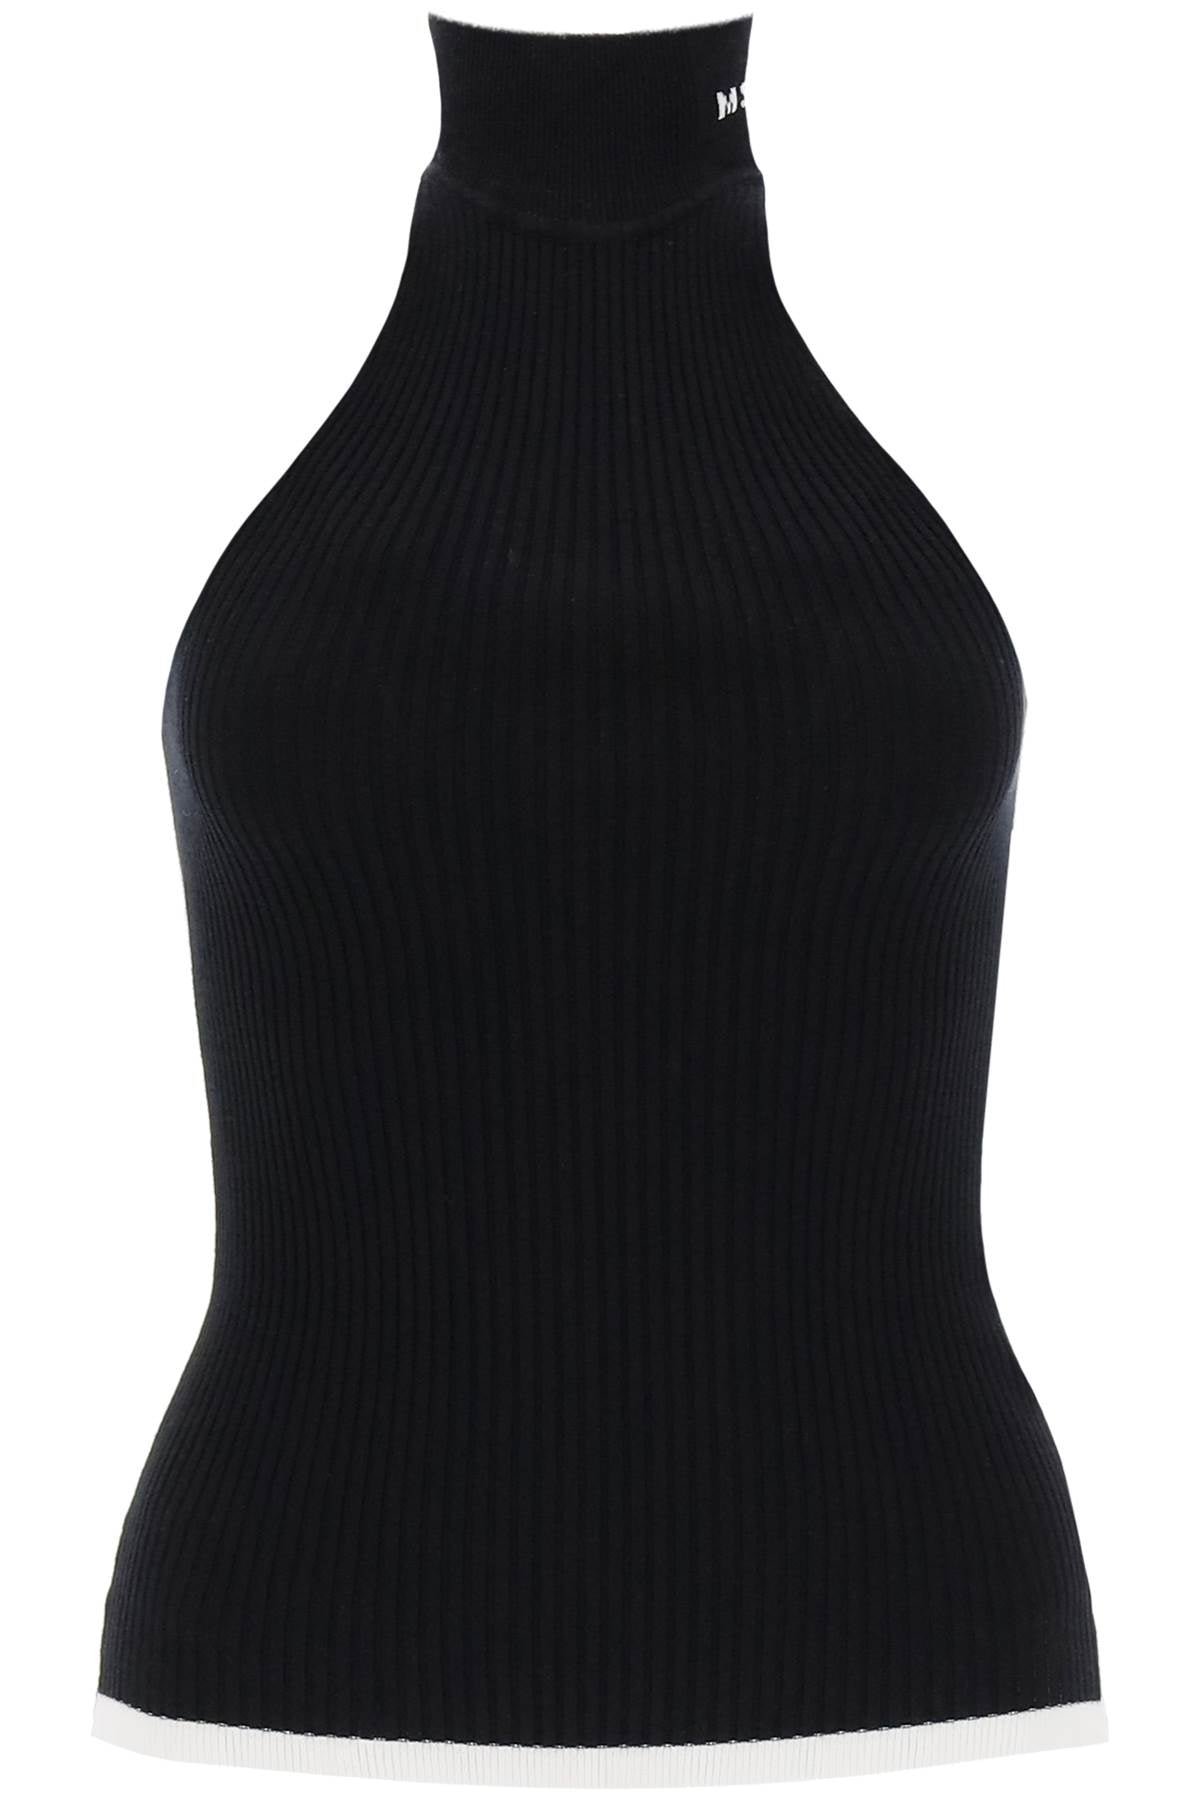 Verdusa Women's Sleeveless High Turtleneck Tank Top Black XS at   Women's Clothing store